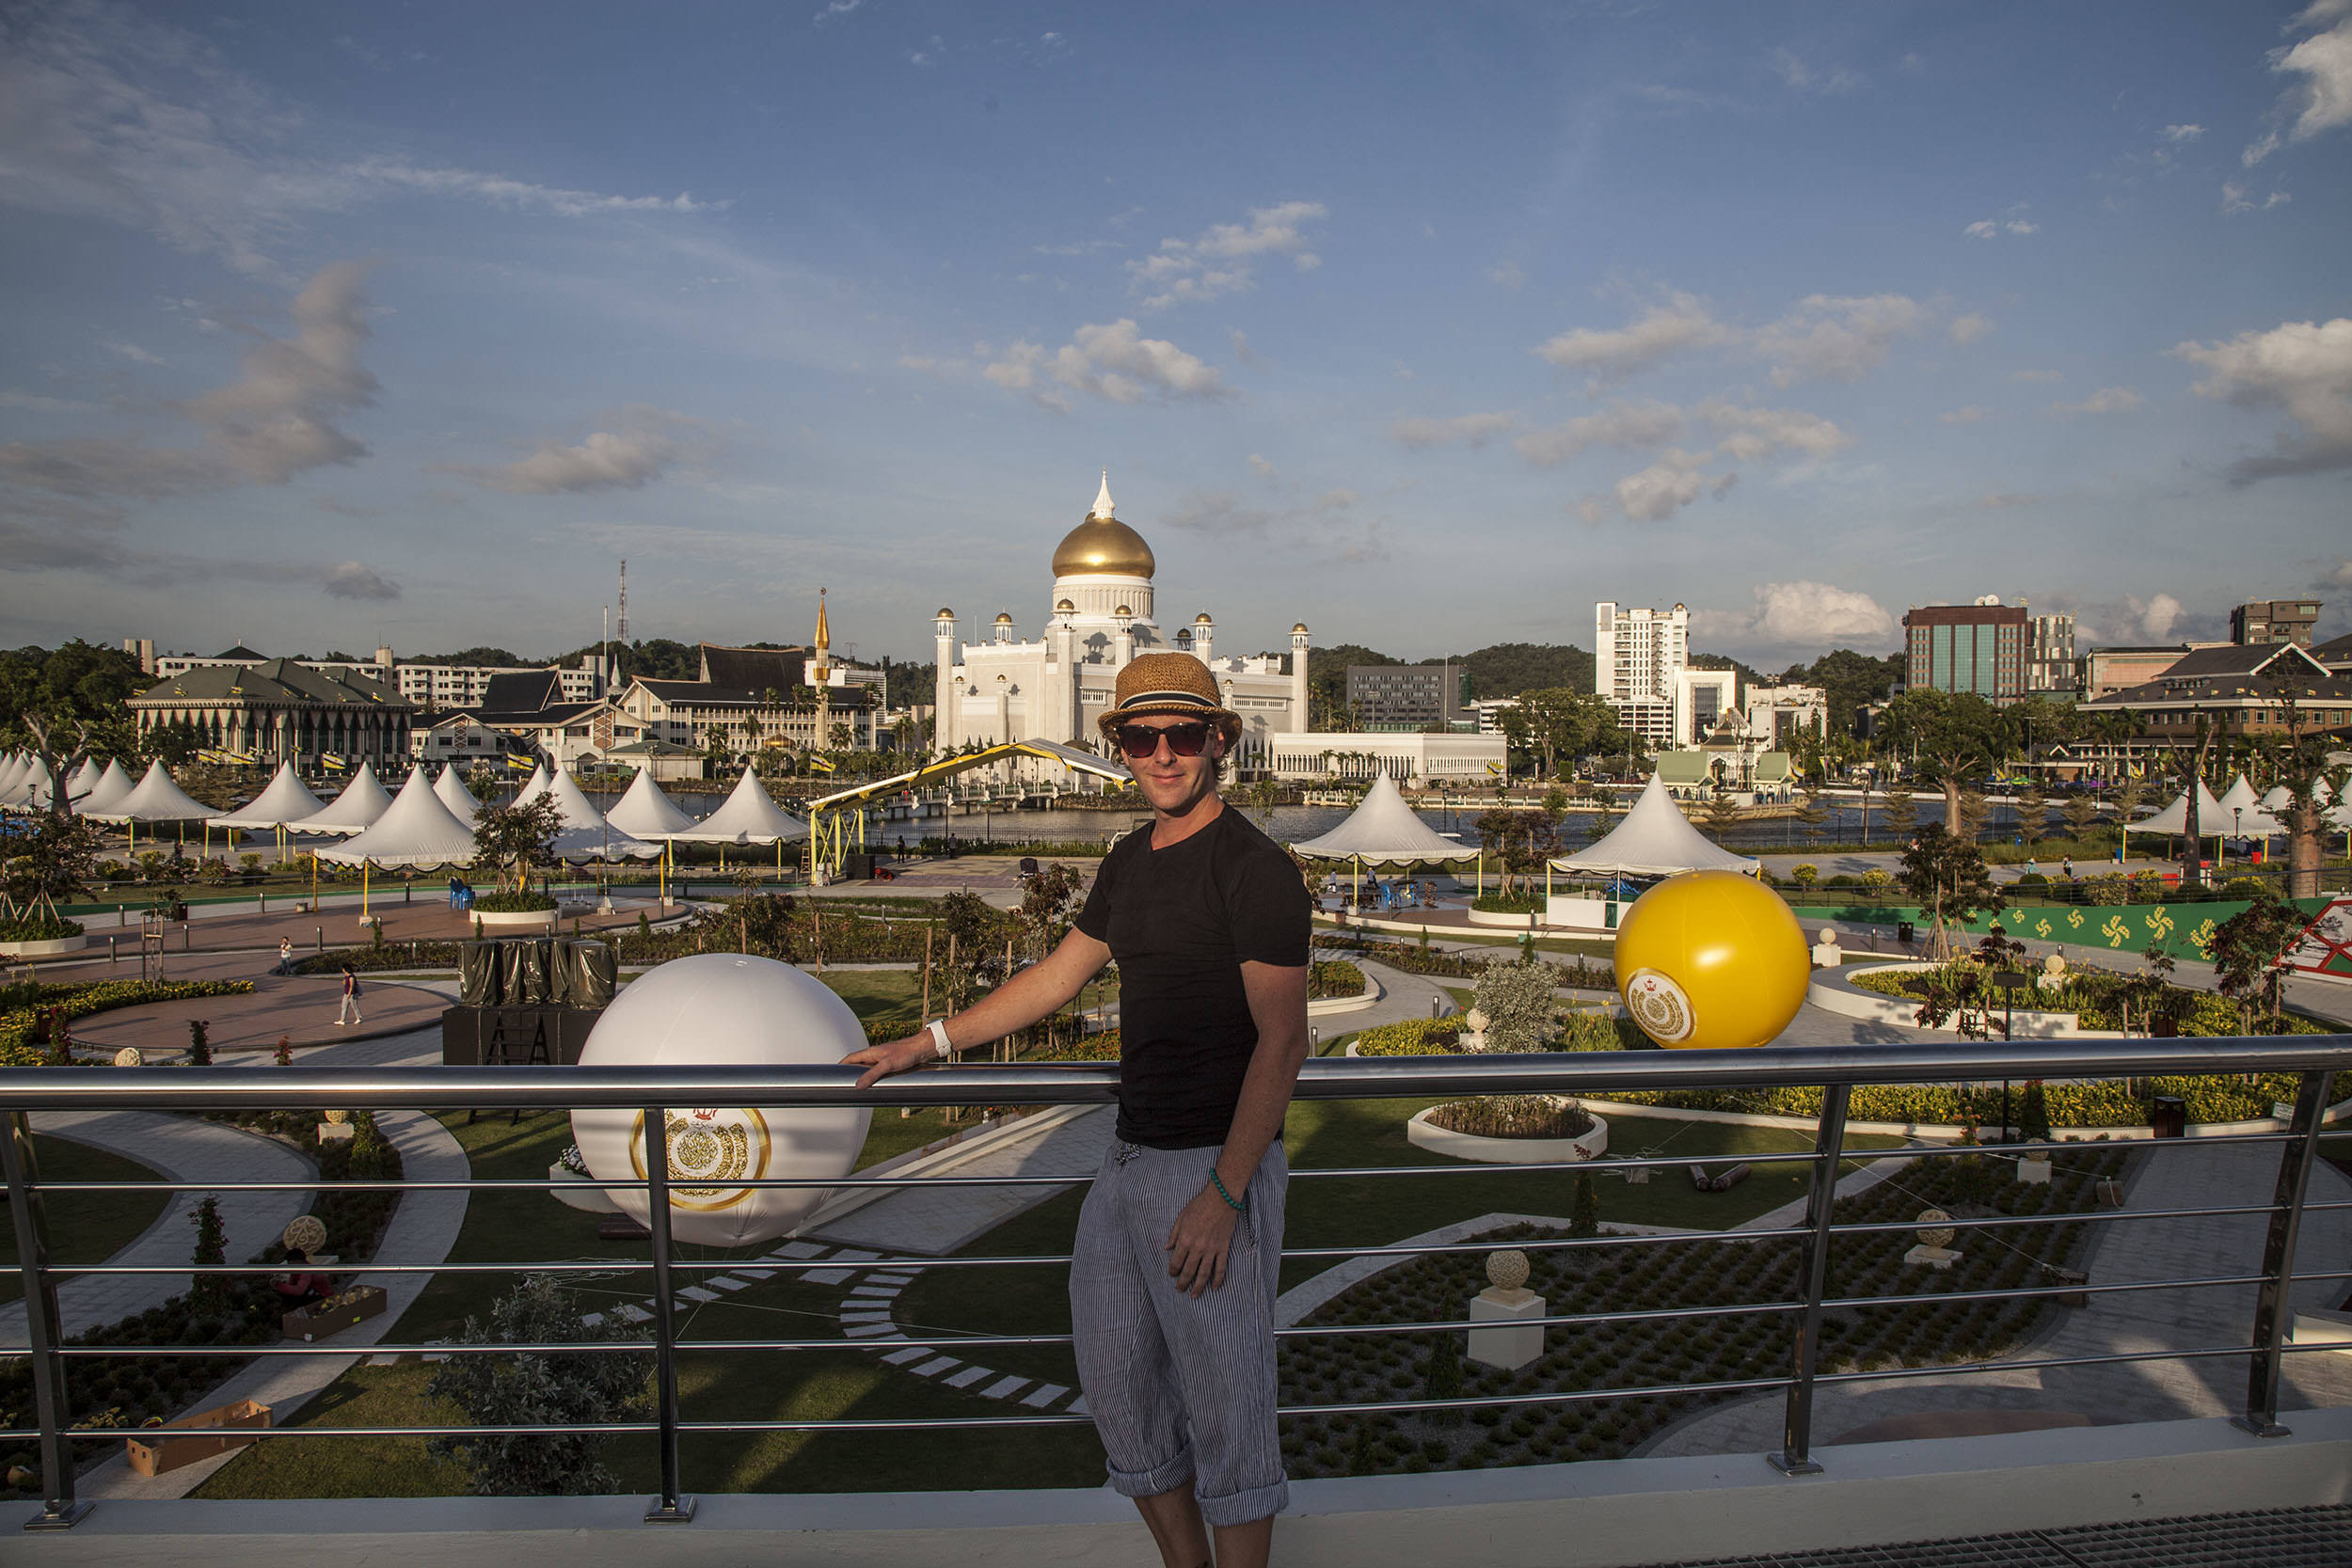 Ben standing in front of Masjid Omar Ali Saifuddien in Bandar Seri Begawan Brunei